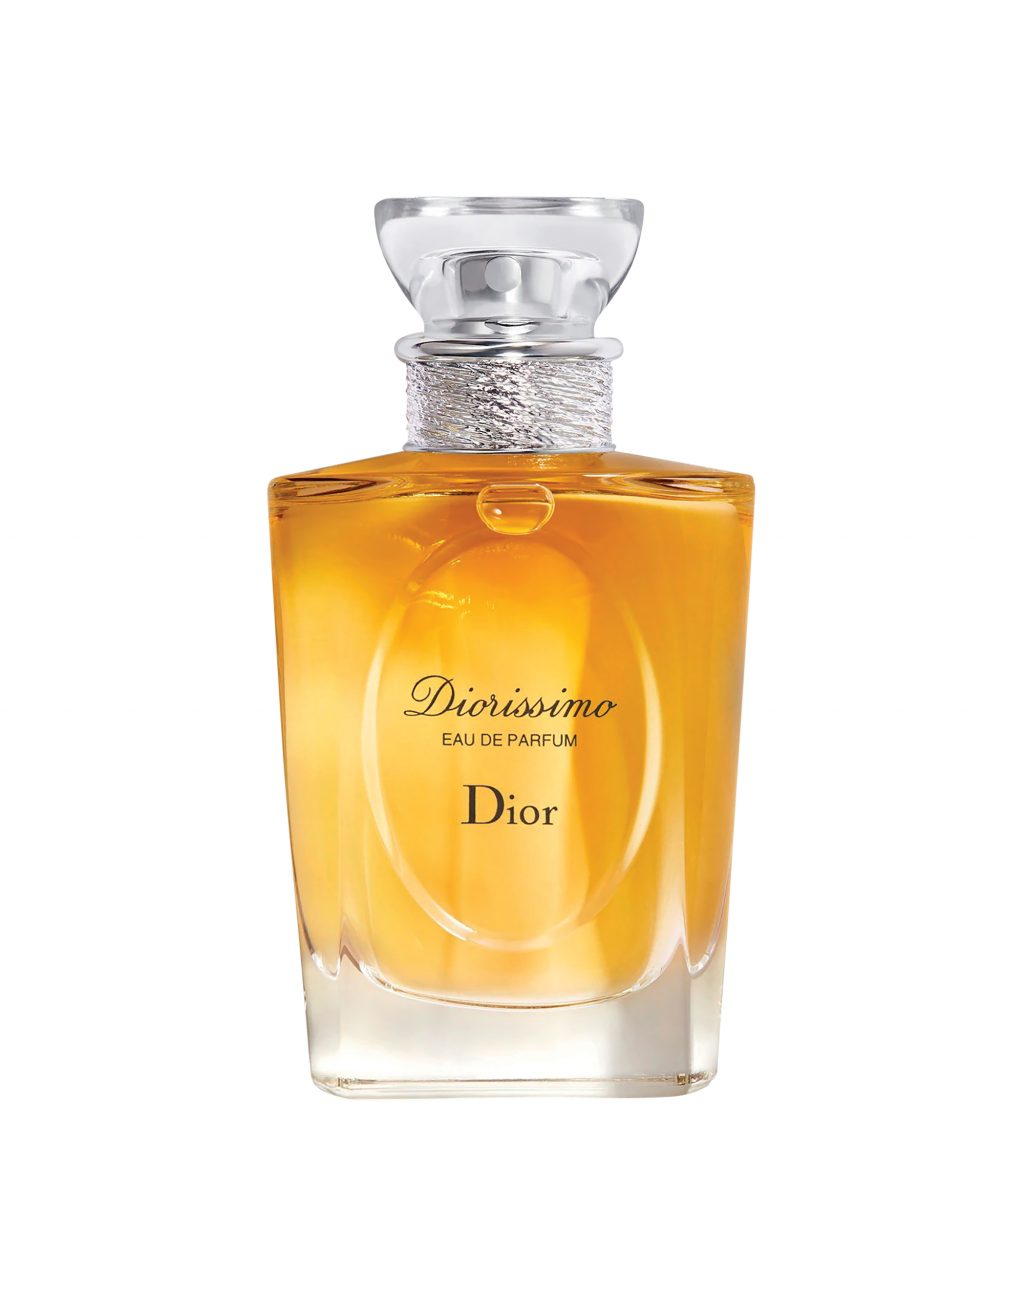 mùi hương Diorissimo của Dior